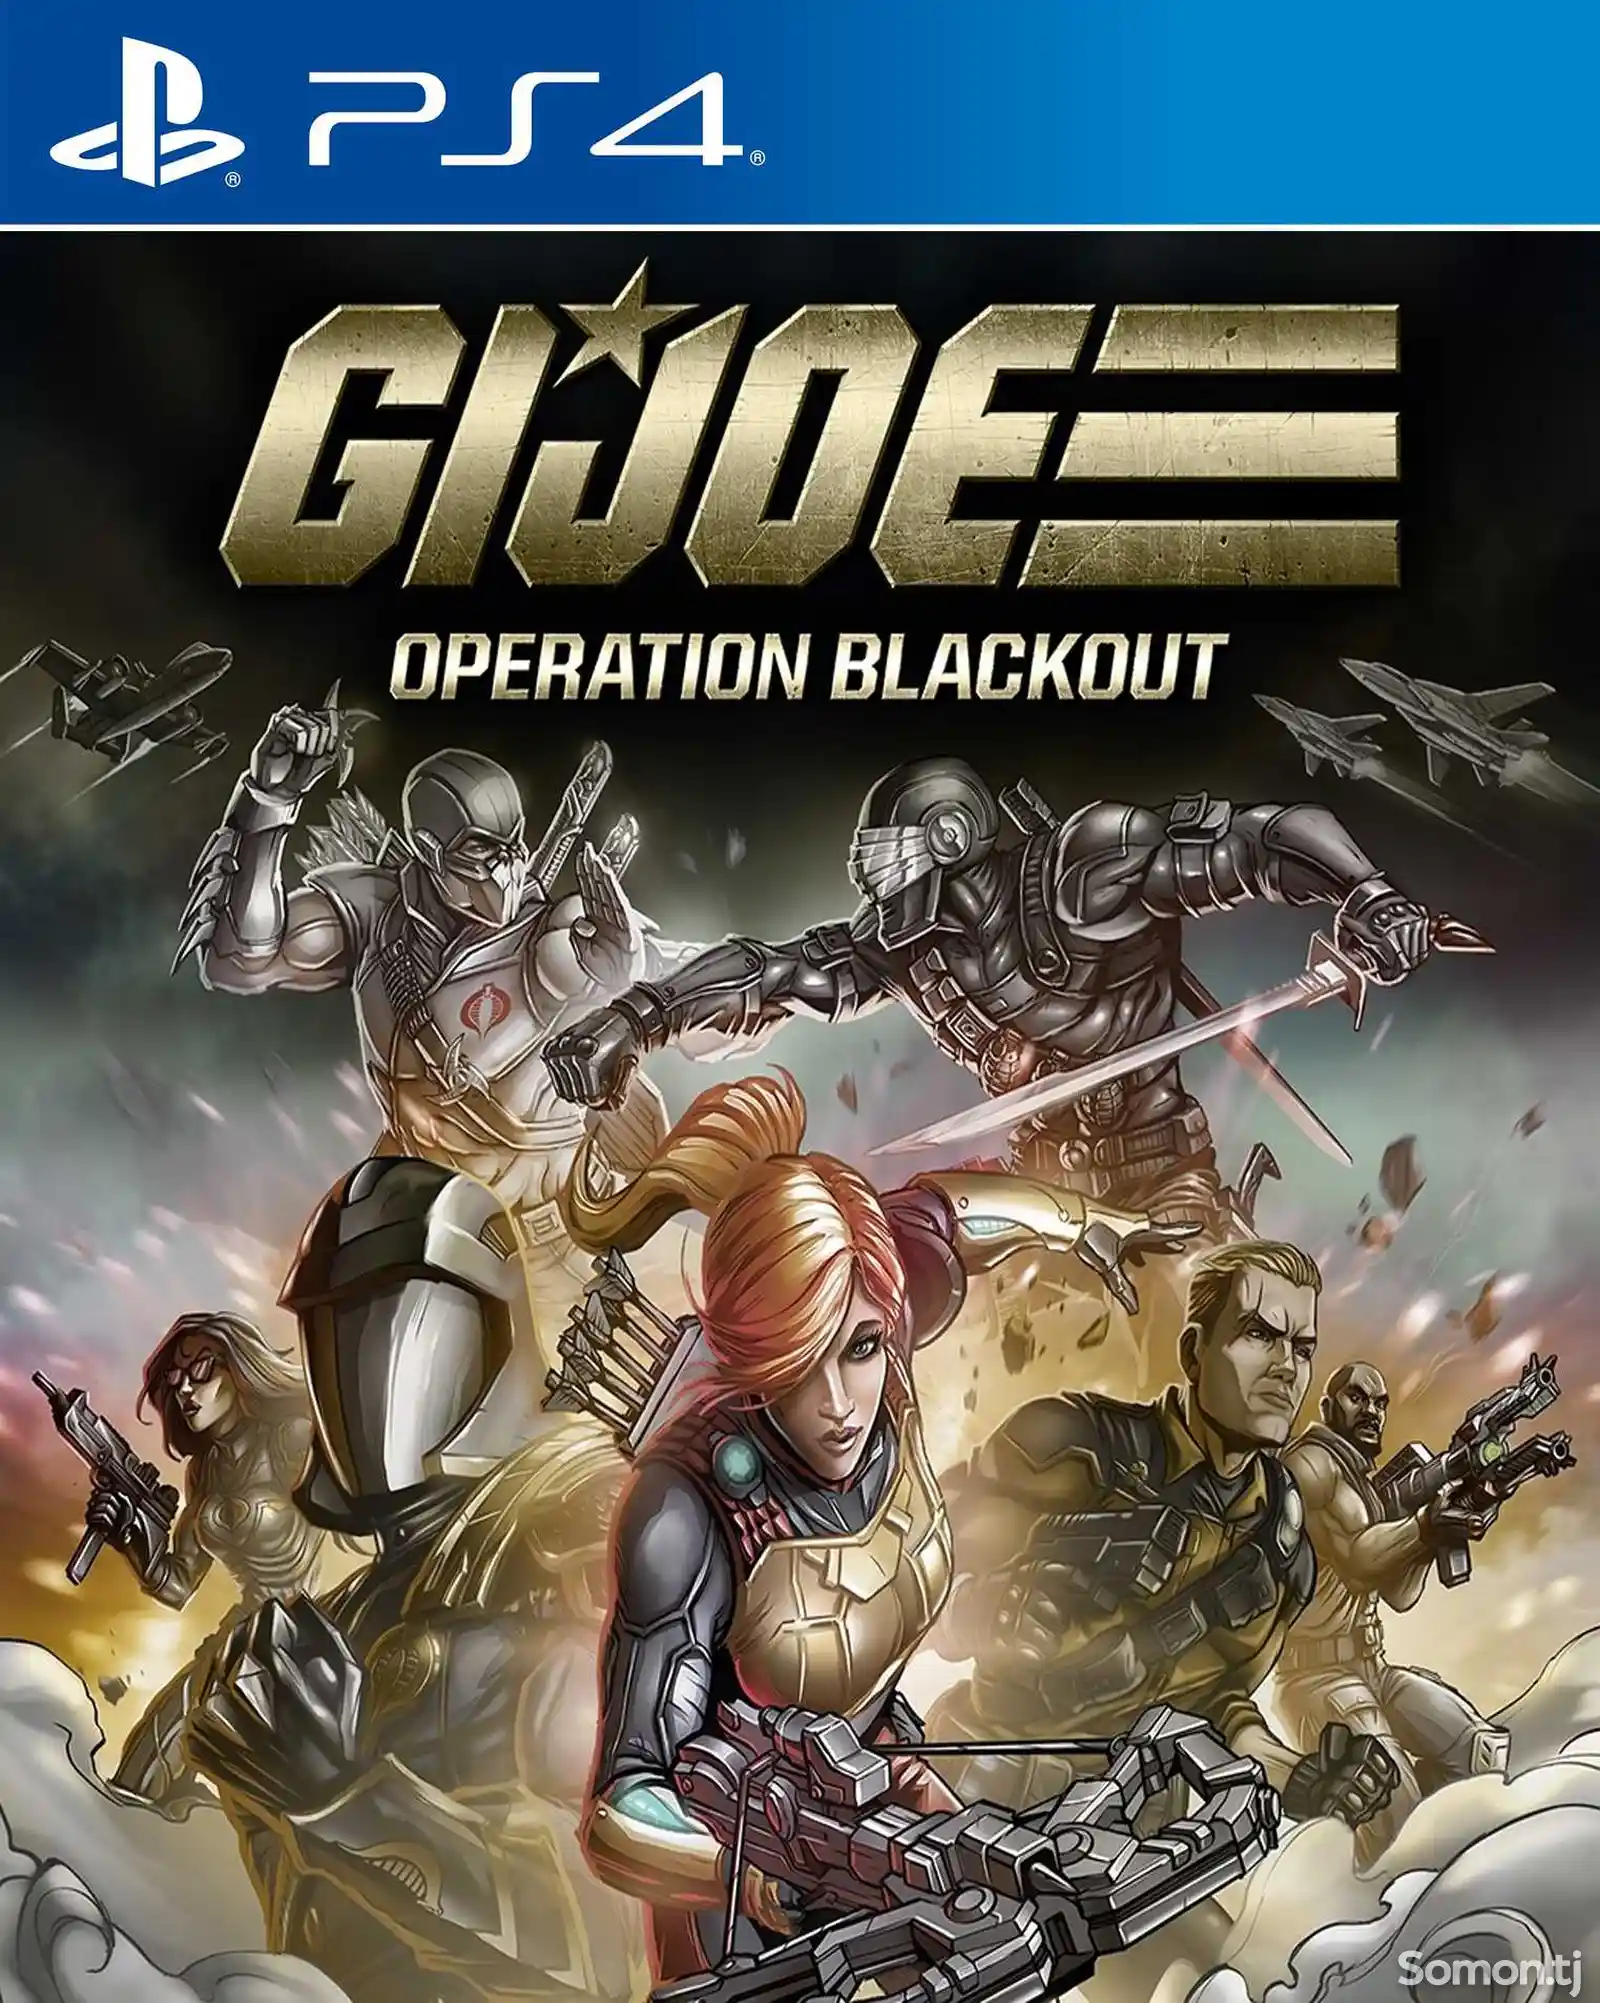 Игра G.I.JOE.operation blackout для PS-4 / 5.05 / 6.72 / 7.02 / 7.55 / 9.00 /-1